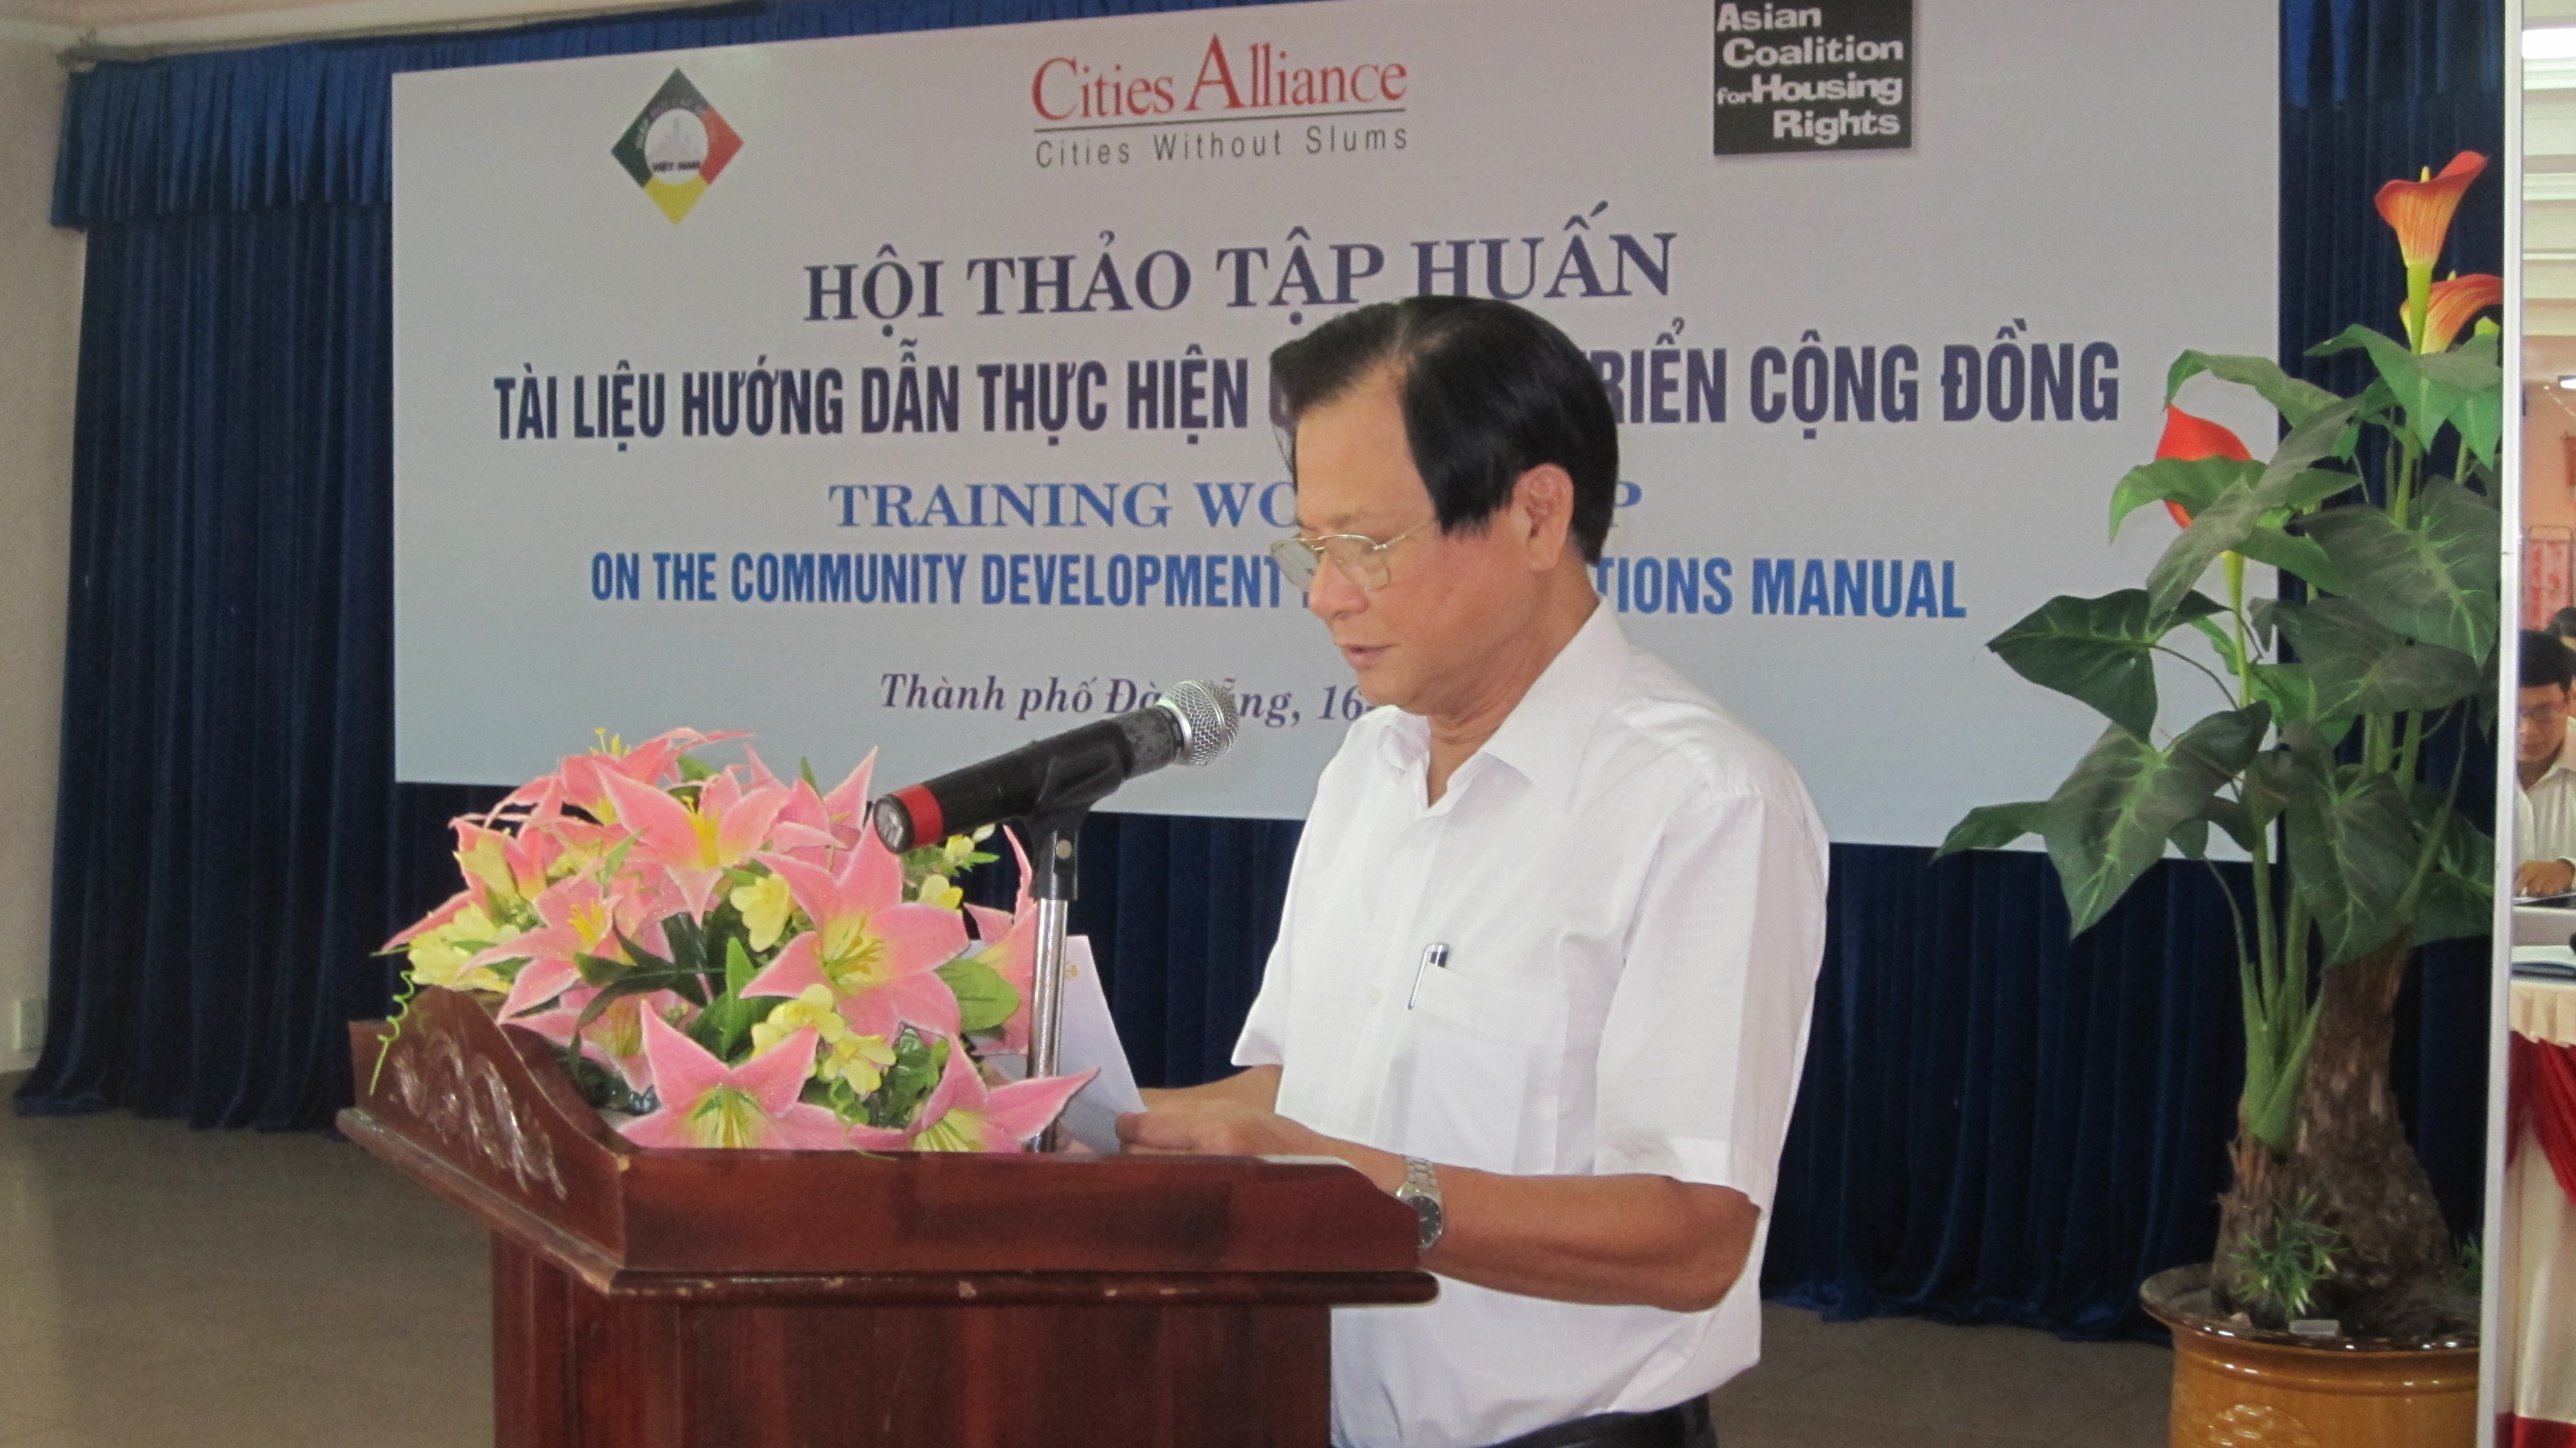 prof.dr. nguyen lan acvn general secretary speak at the training workshop